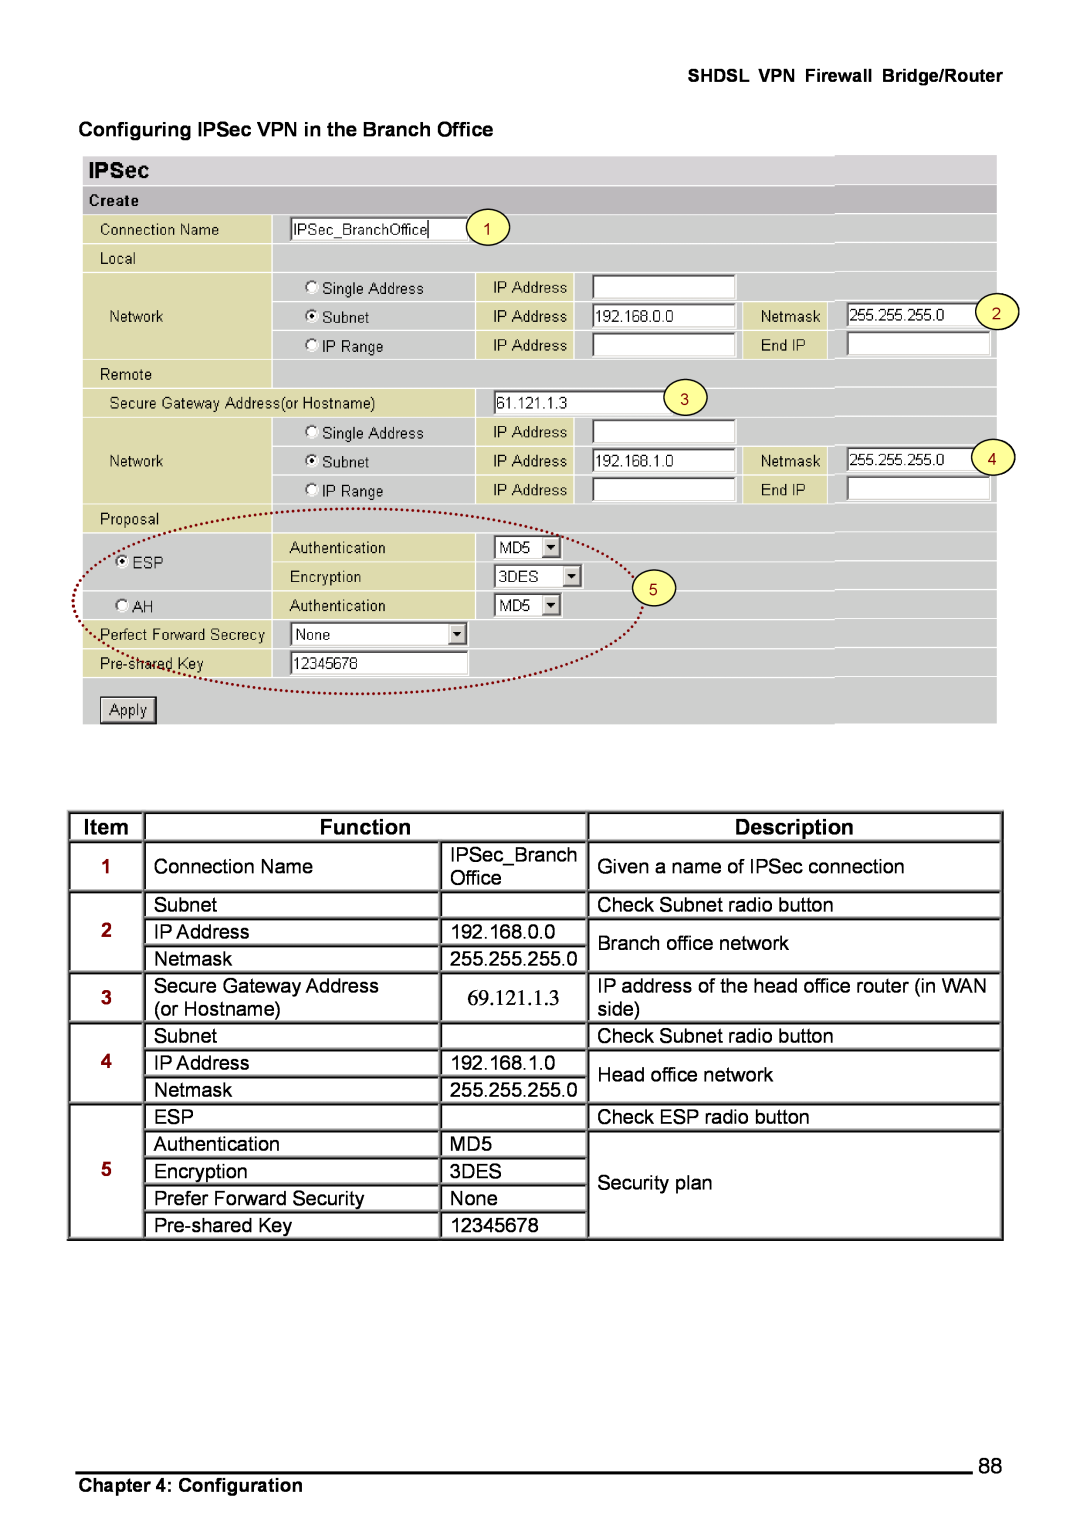 Billion Electric Company 8501 user manual Function, Description, Configuring IPSec VPN in the Branch Office 